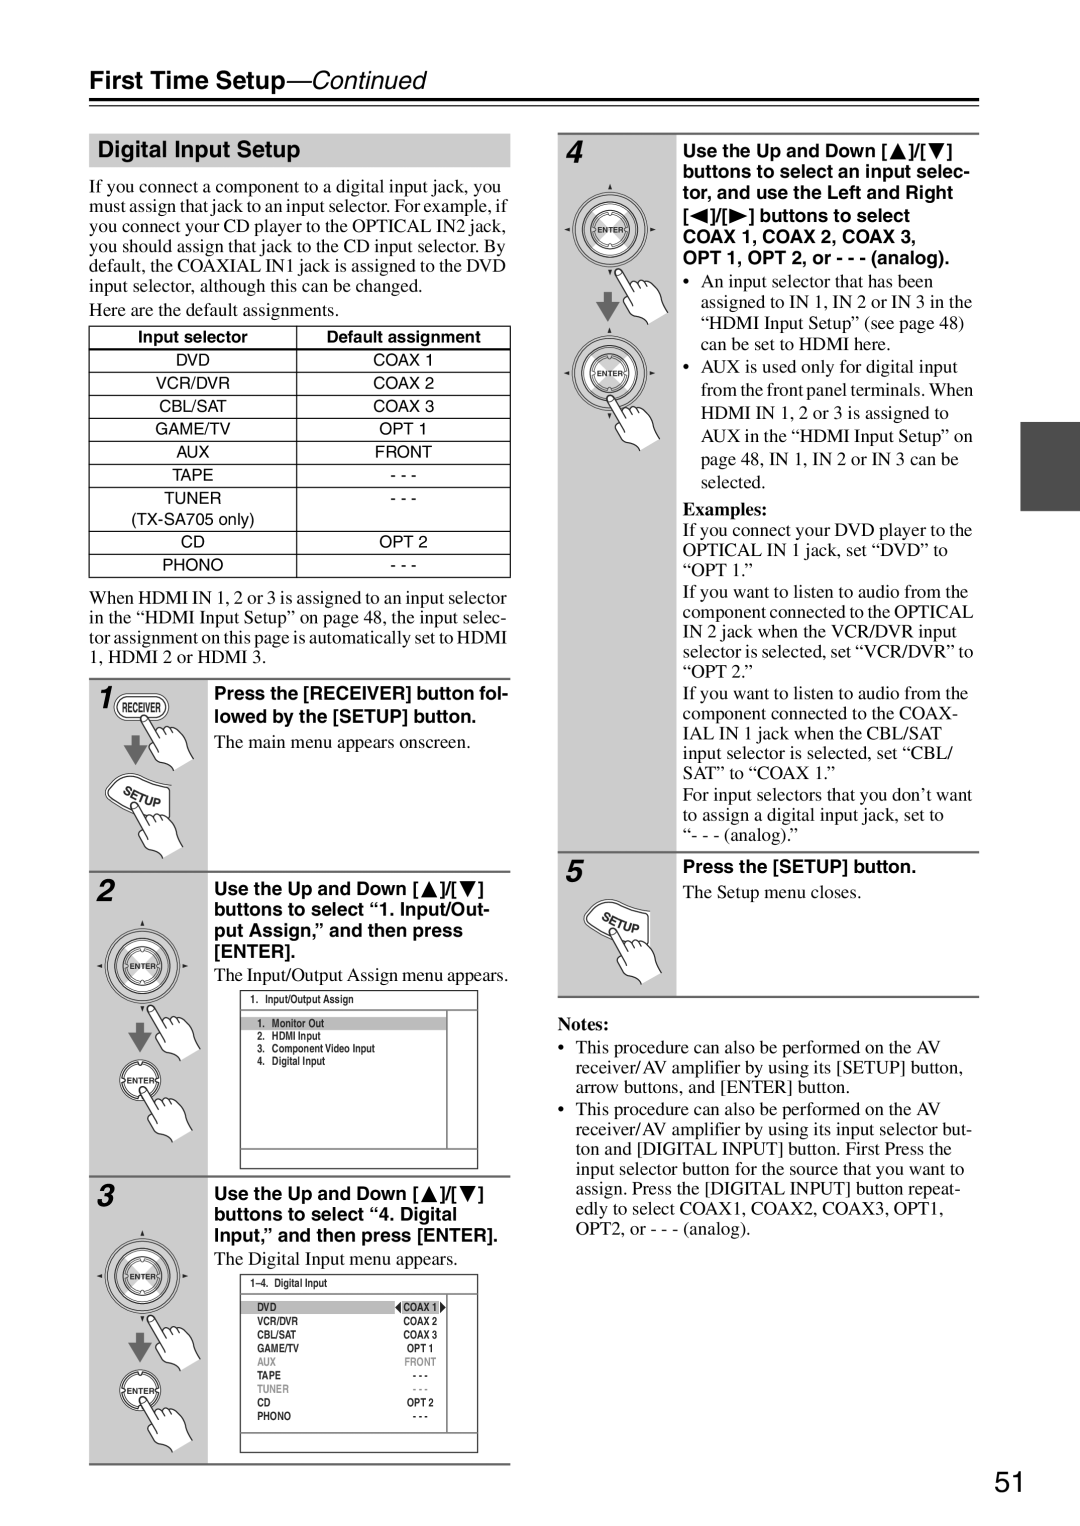 Onkyo TX-SA705 instruction manual First Time Setup—Continued, Digital Input Setup, Examples, Notes 